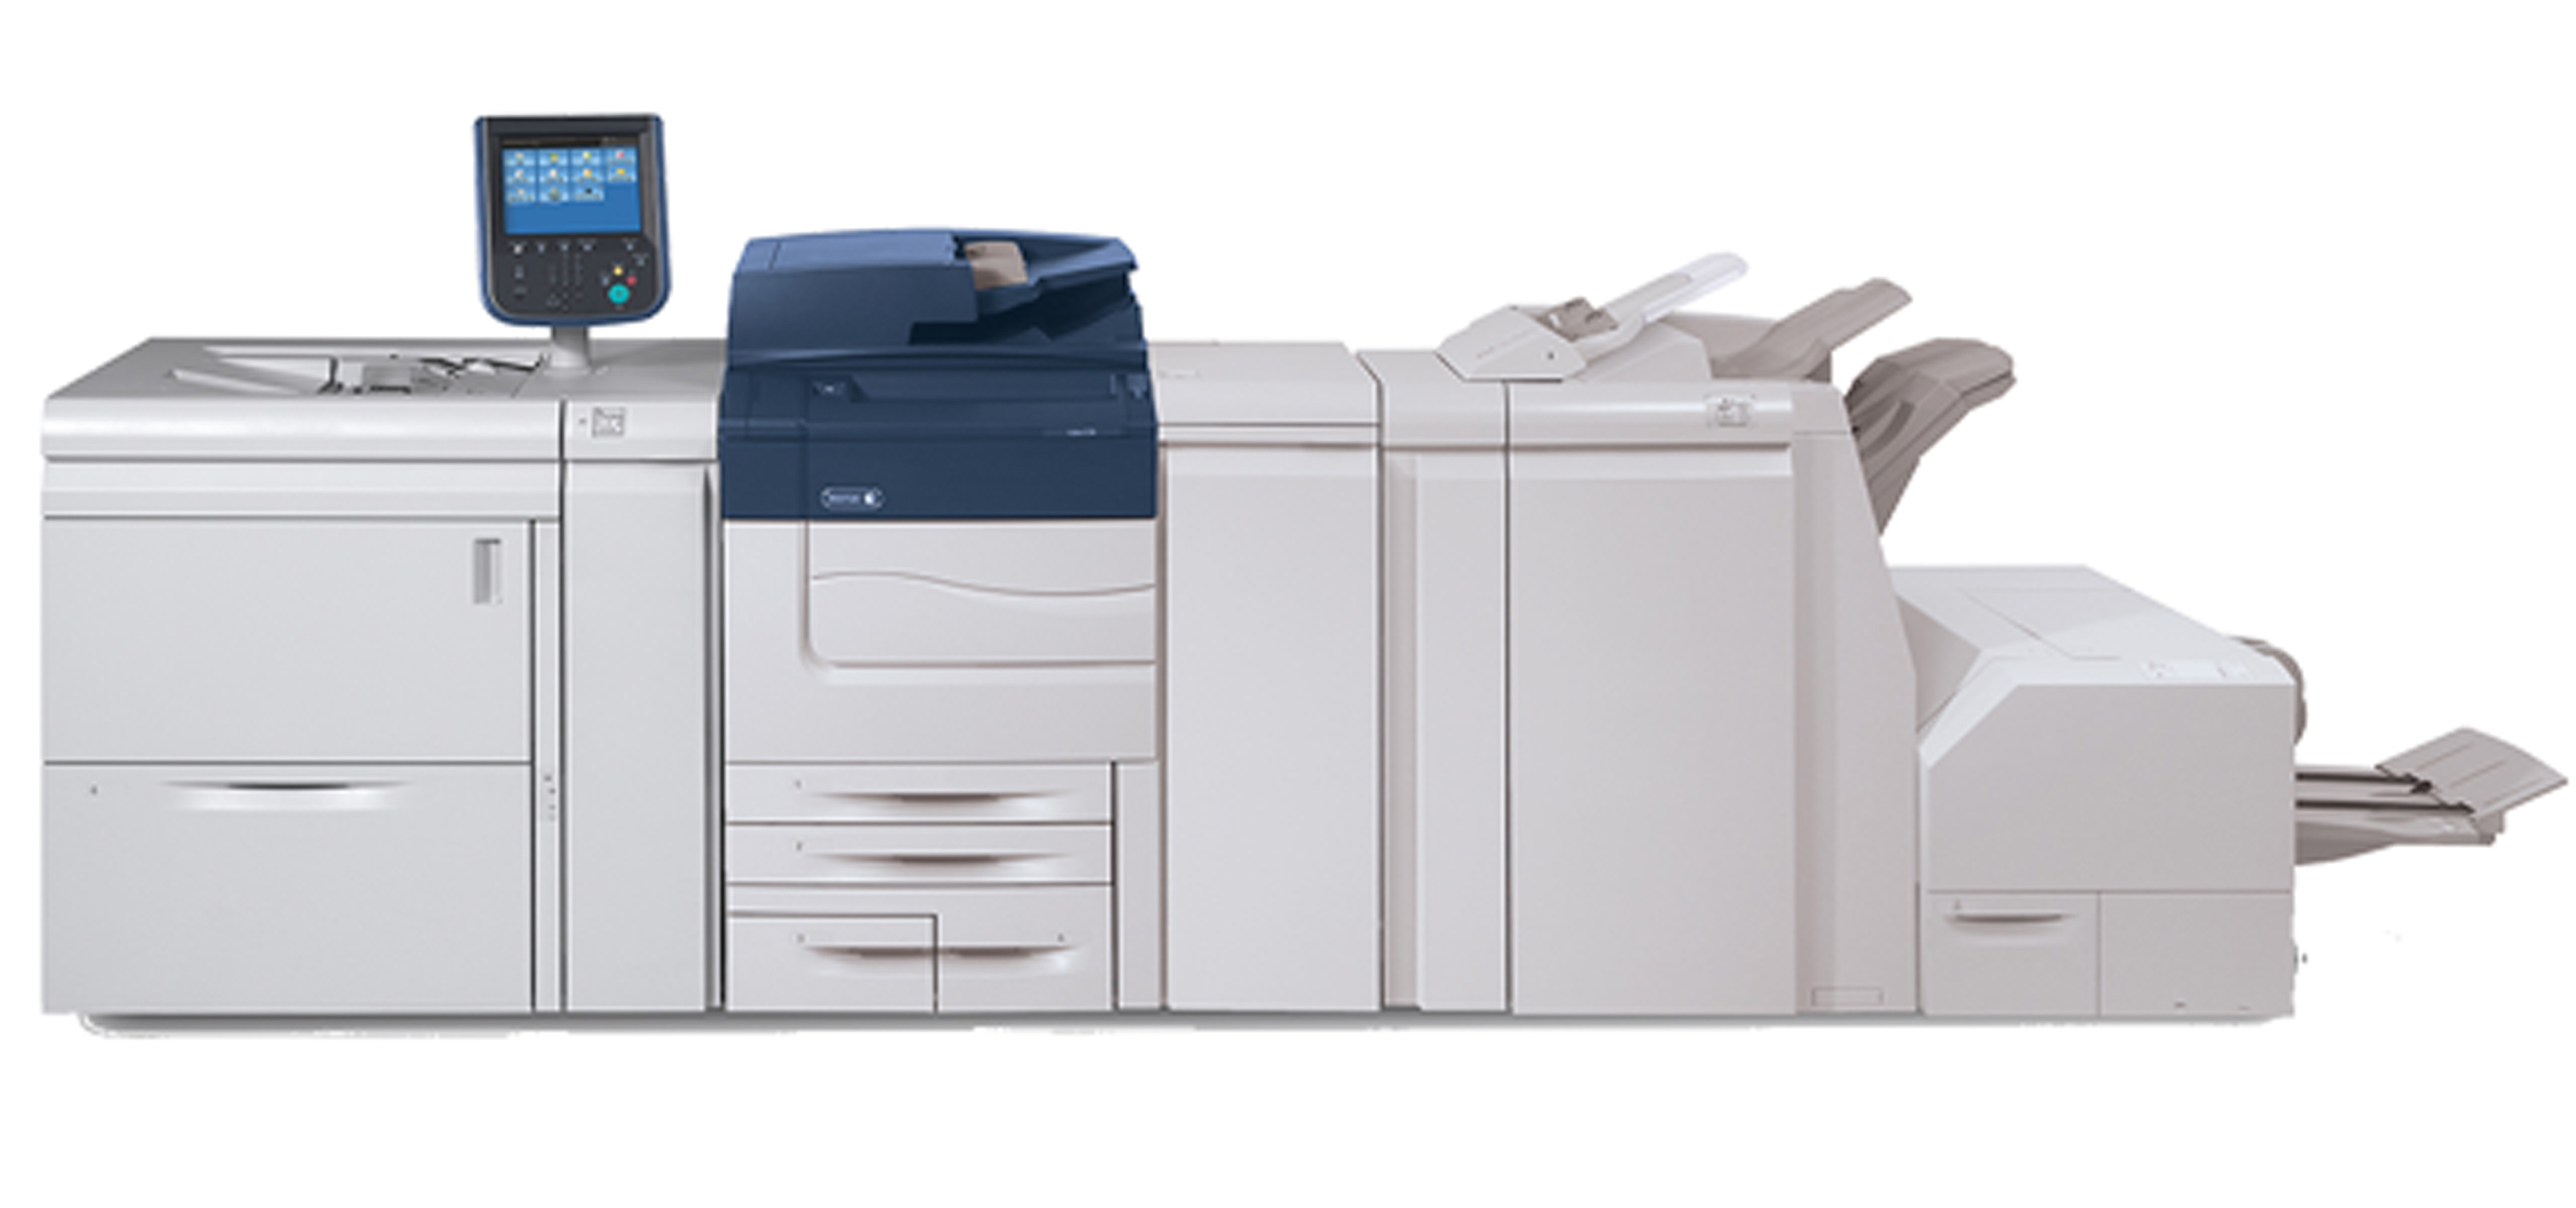 Xerox showcases Color C70 at PrintPack 2015